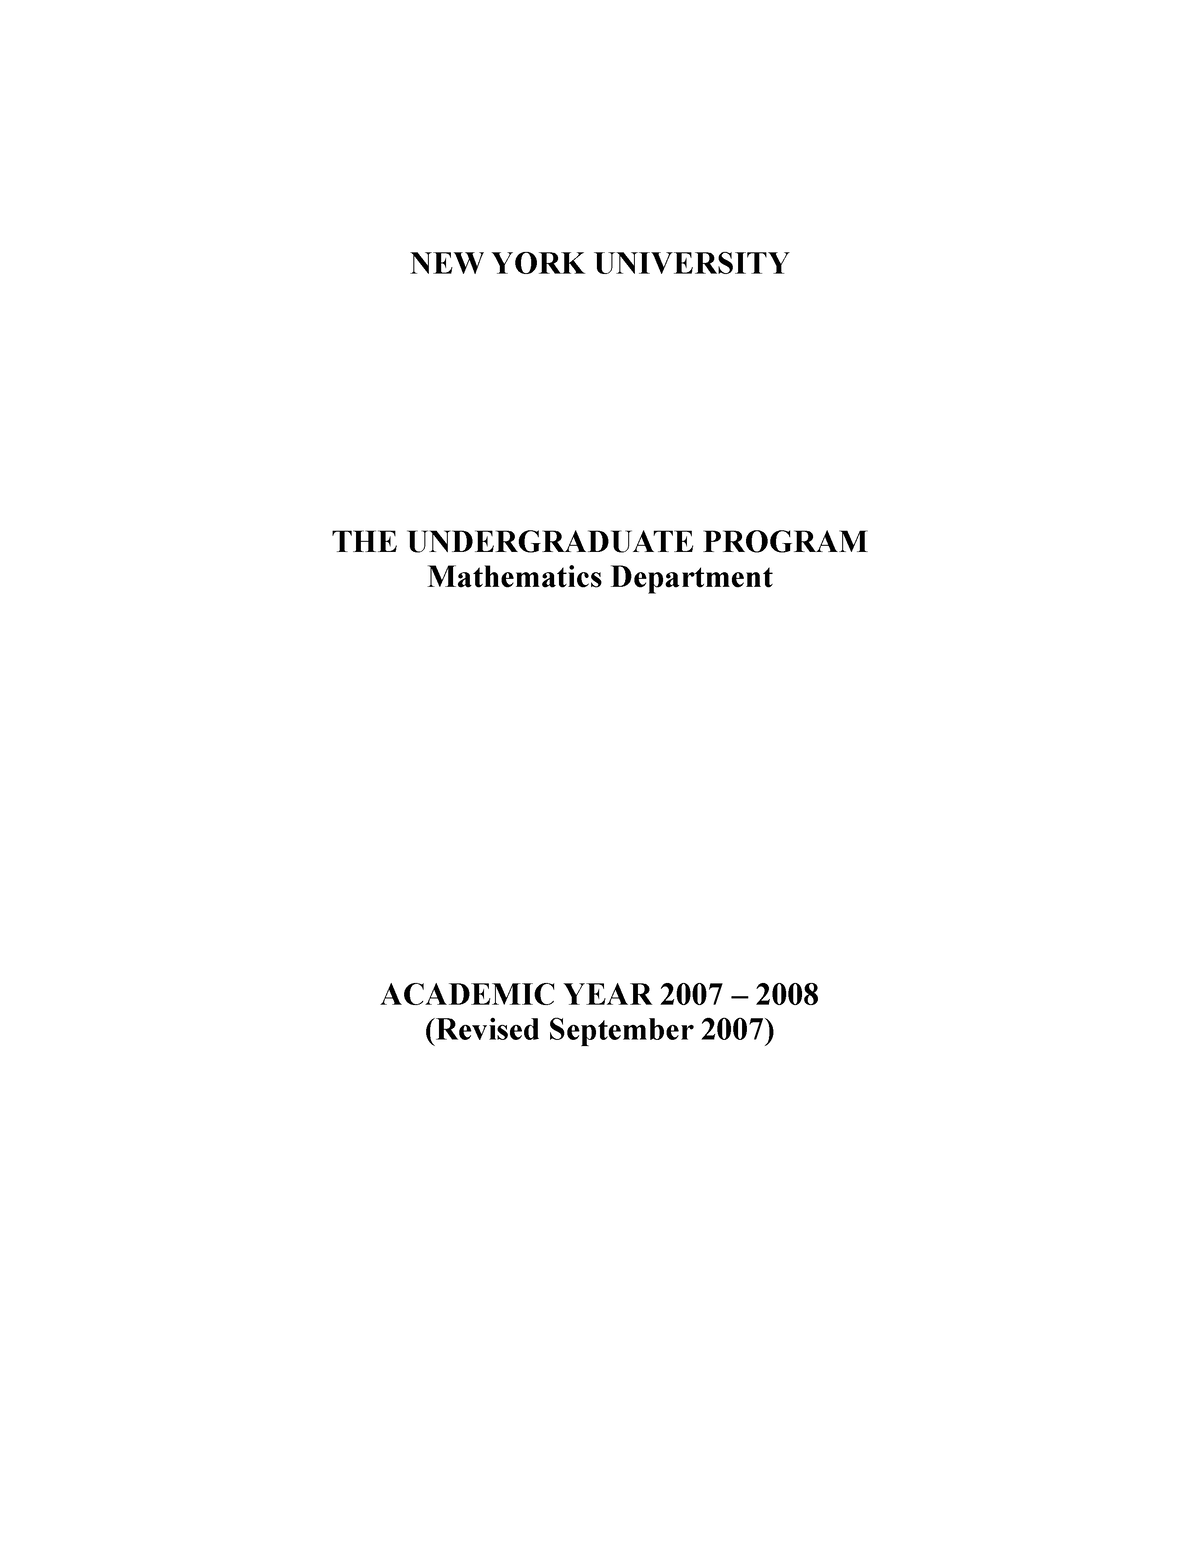 math-major-bulletin-new-york-university-the-undergraduate-program